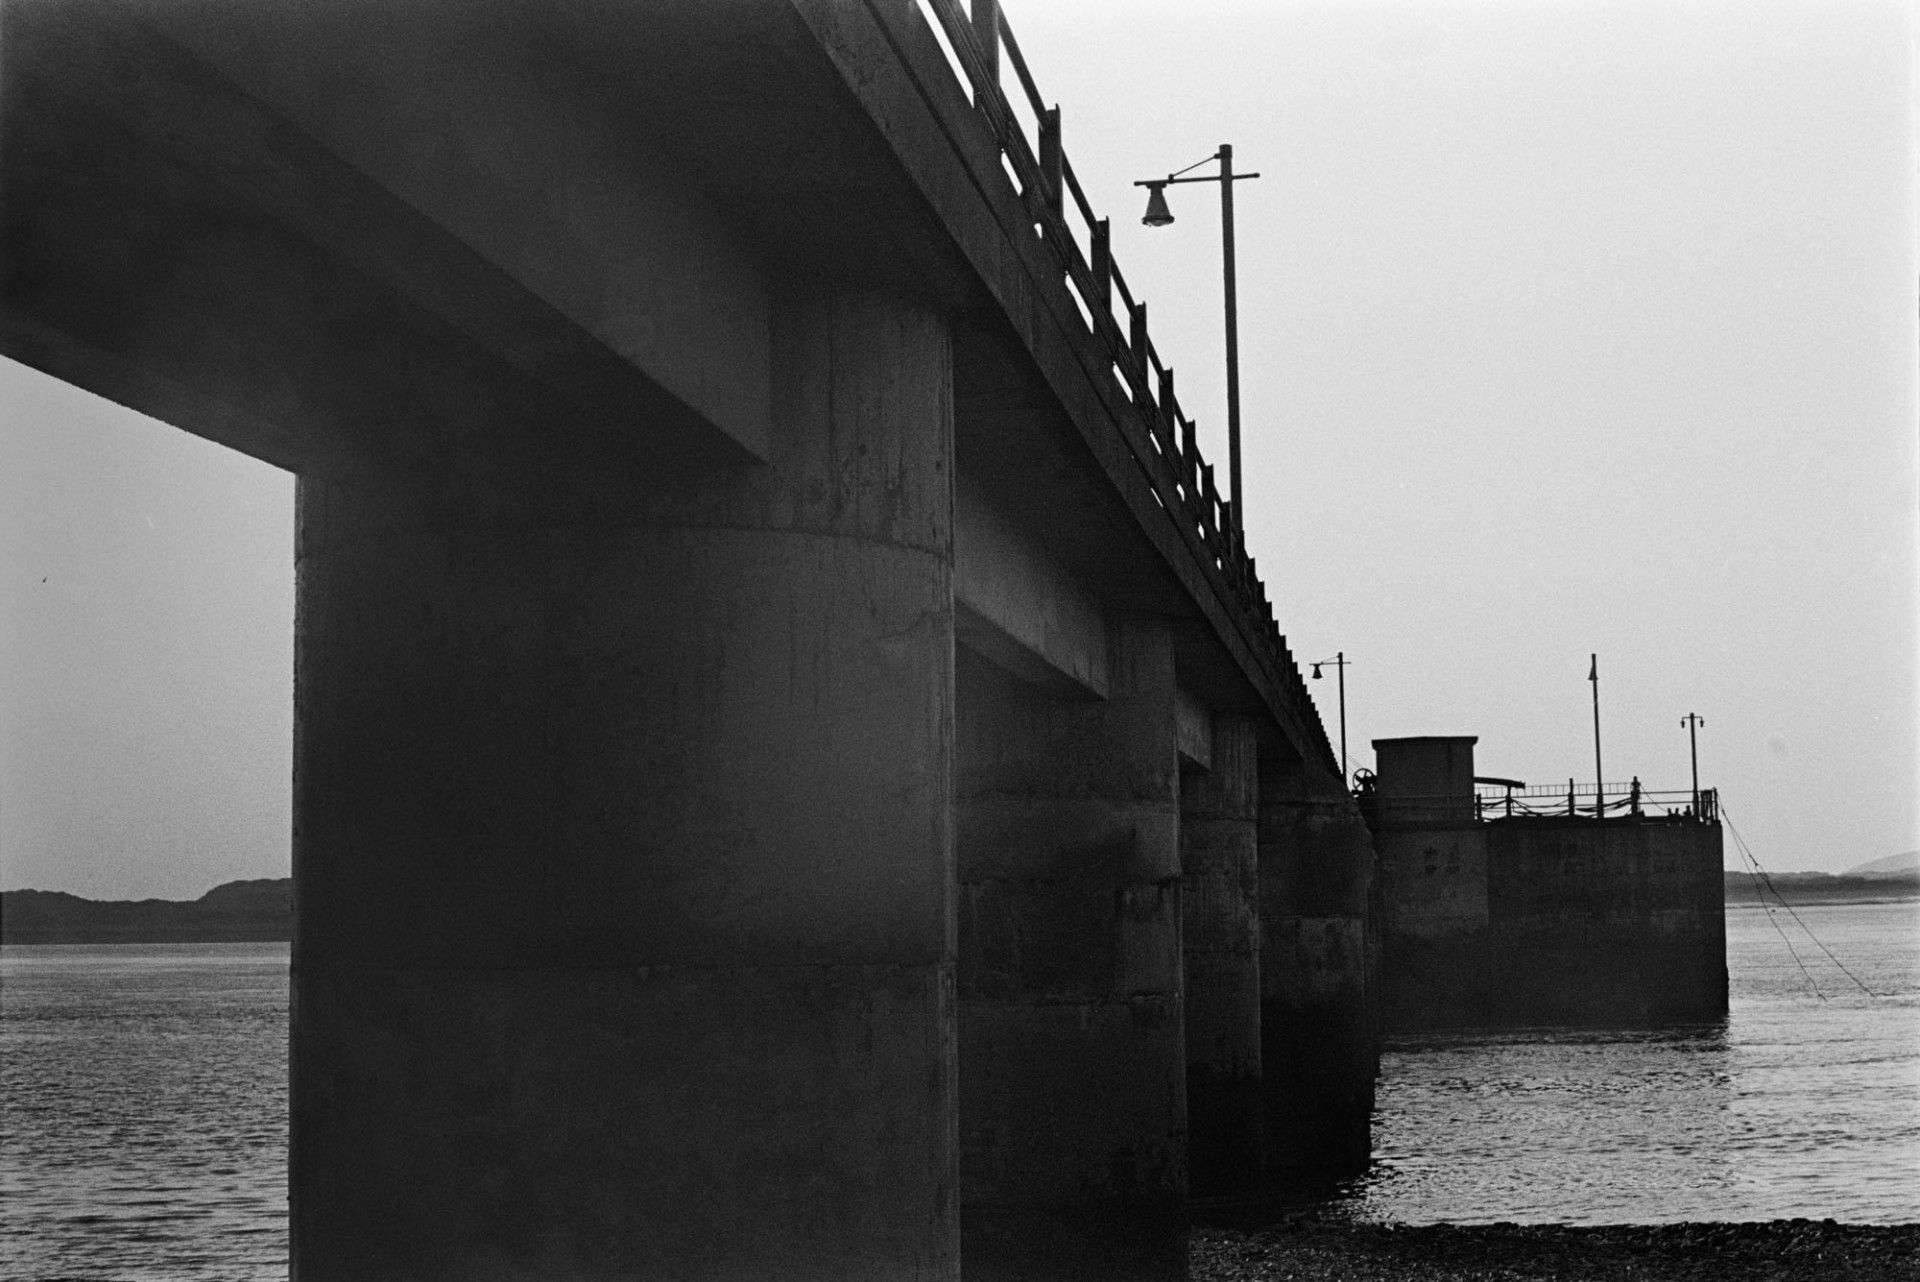 A pier or a concrete bridge.